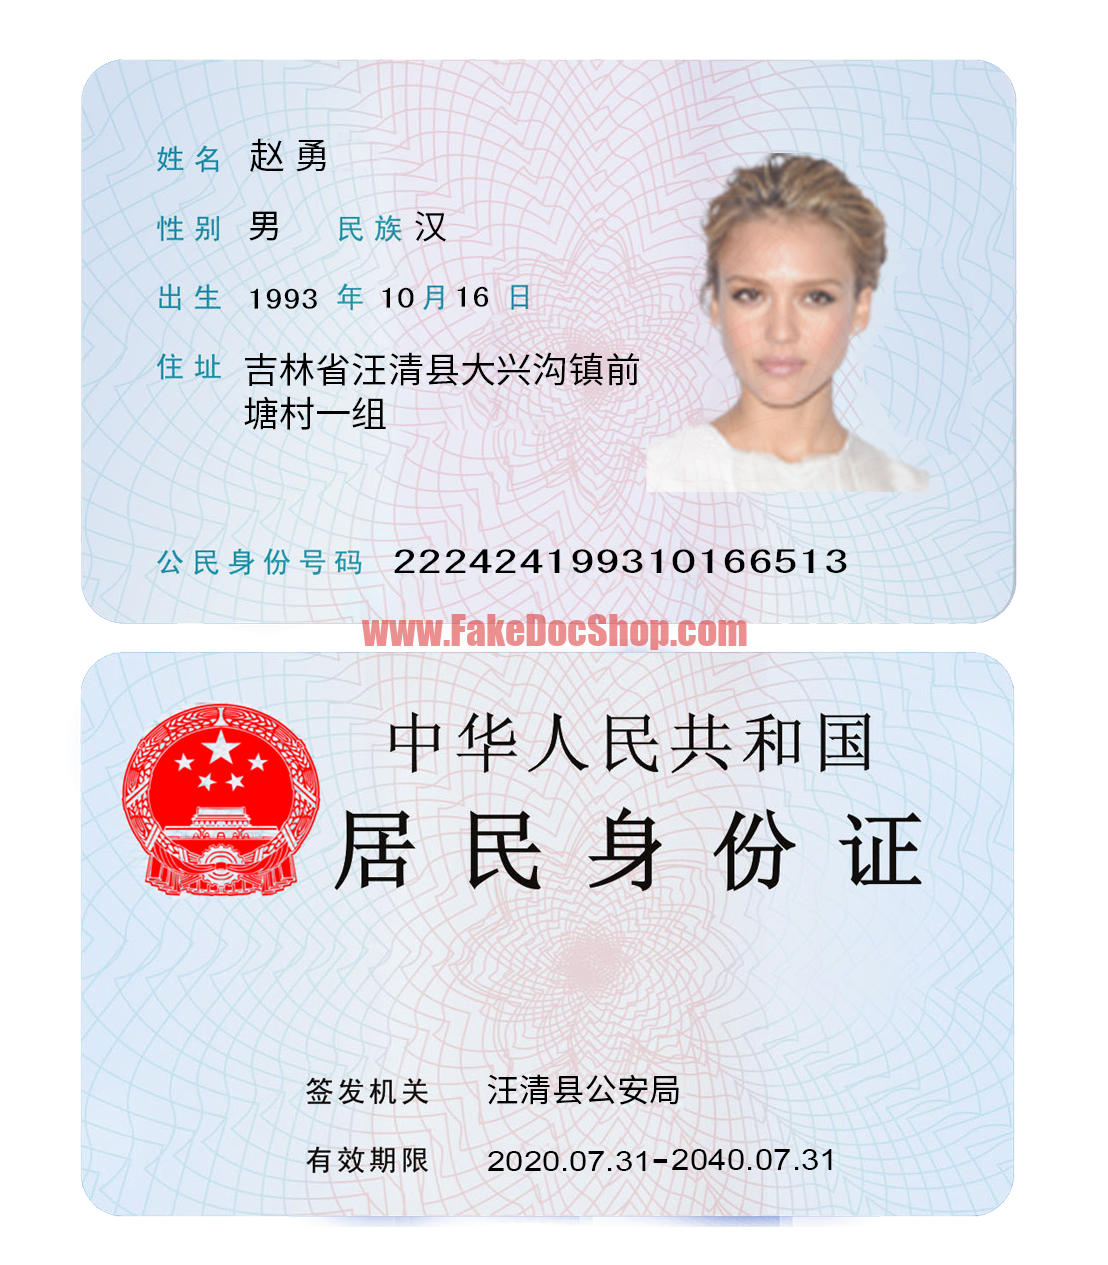 China ID Card PSD Template